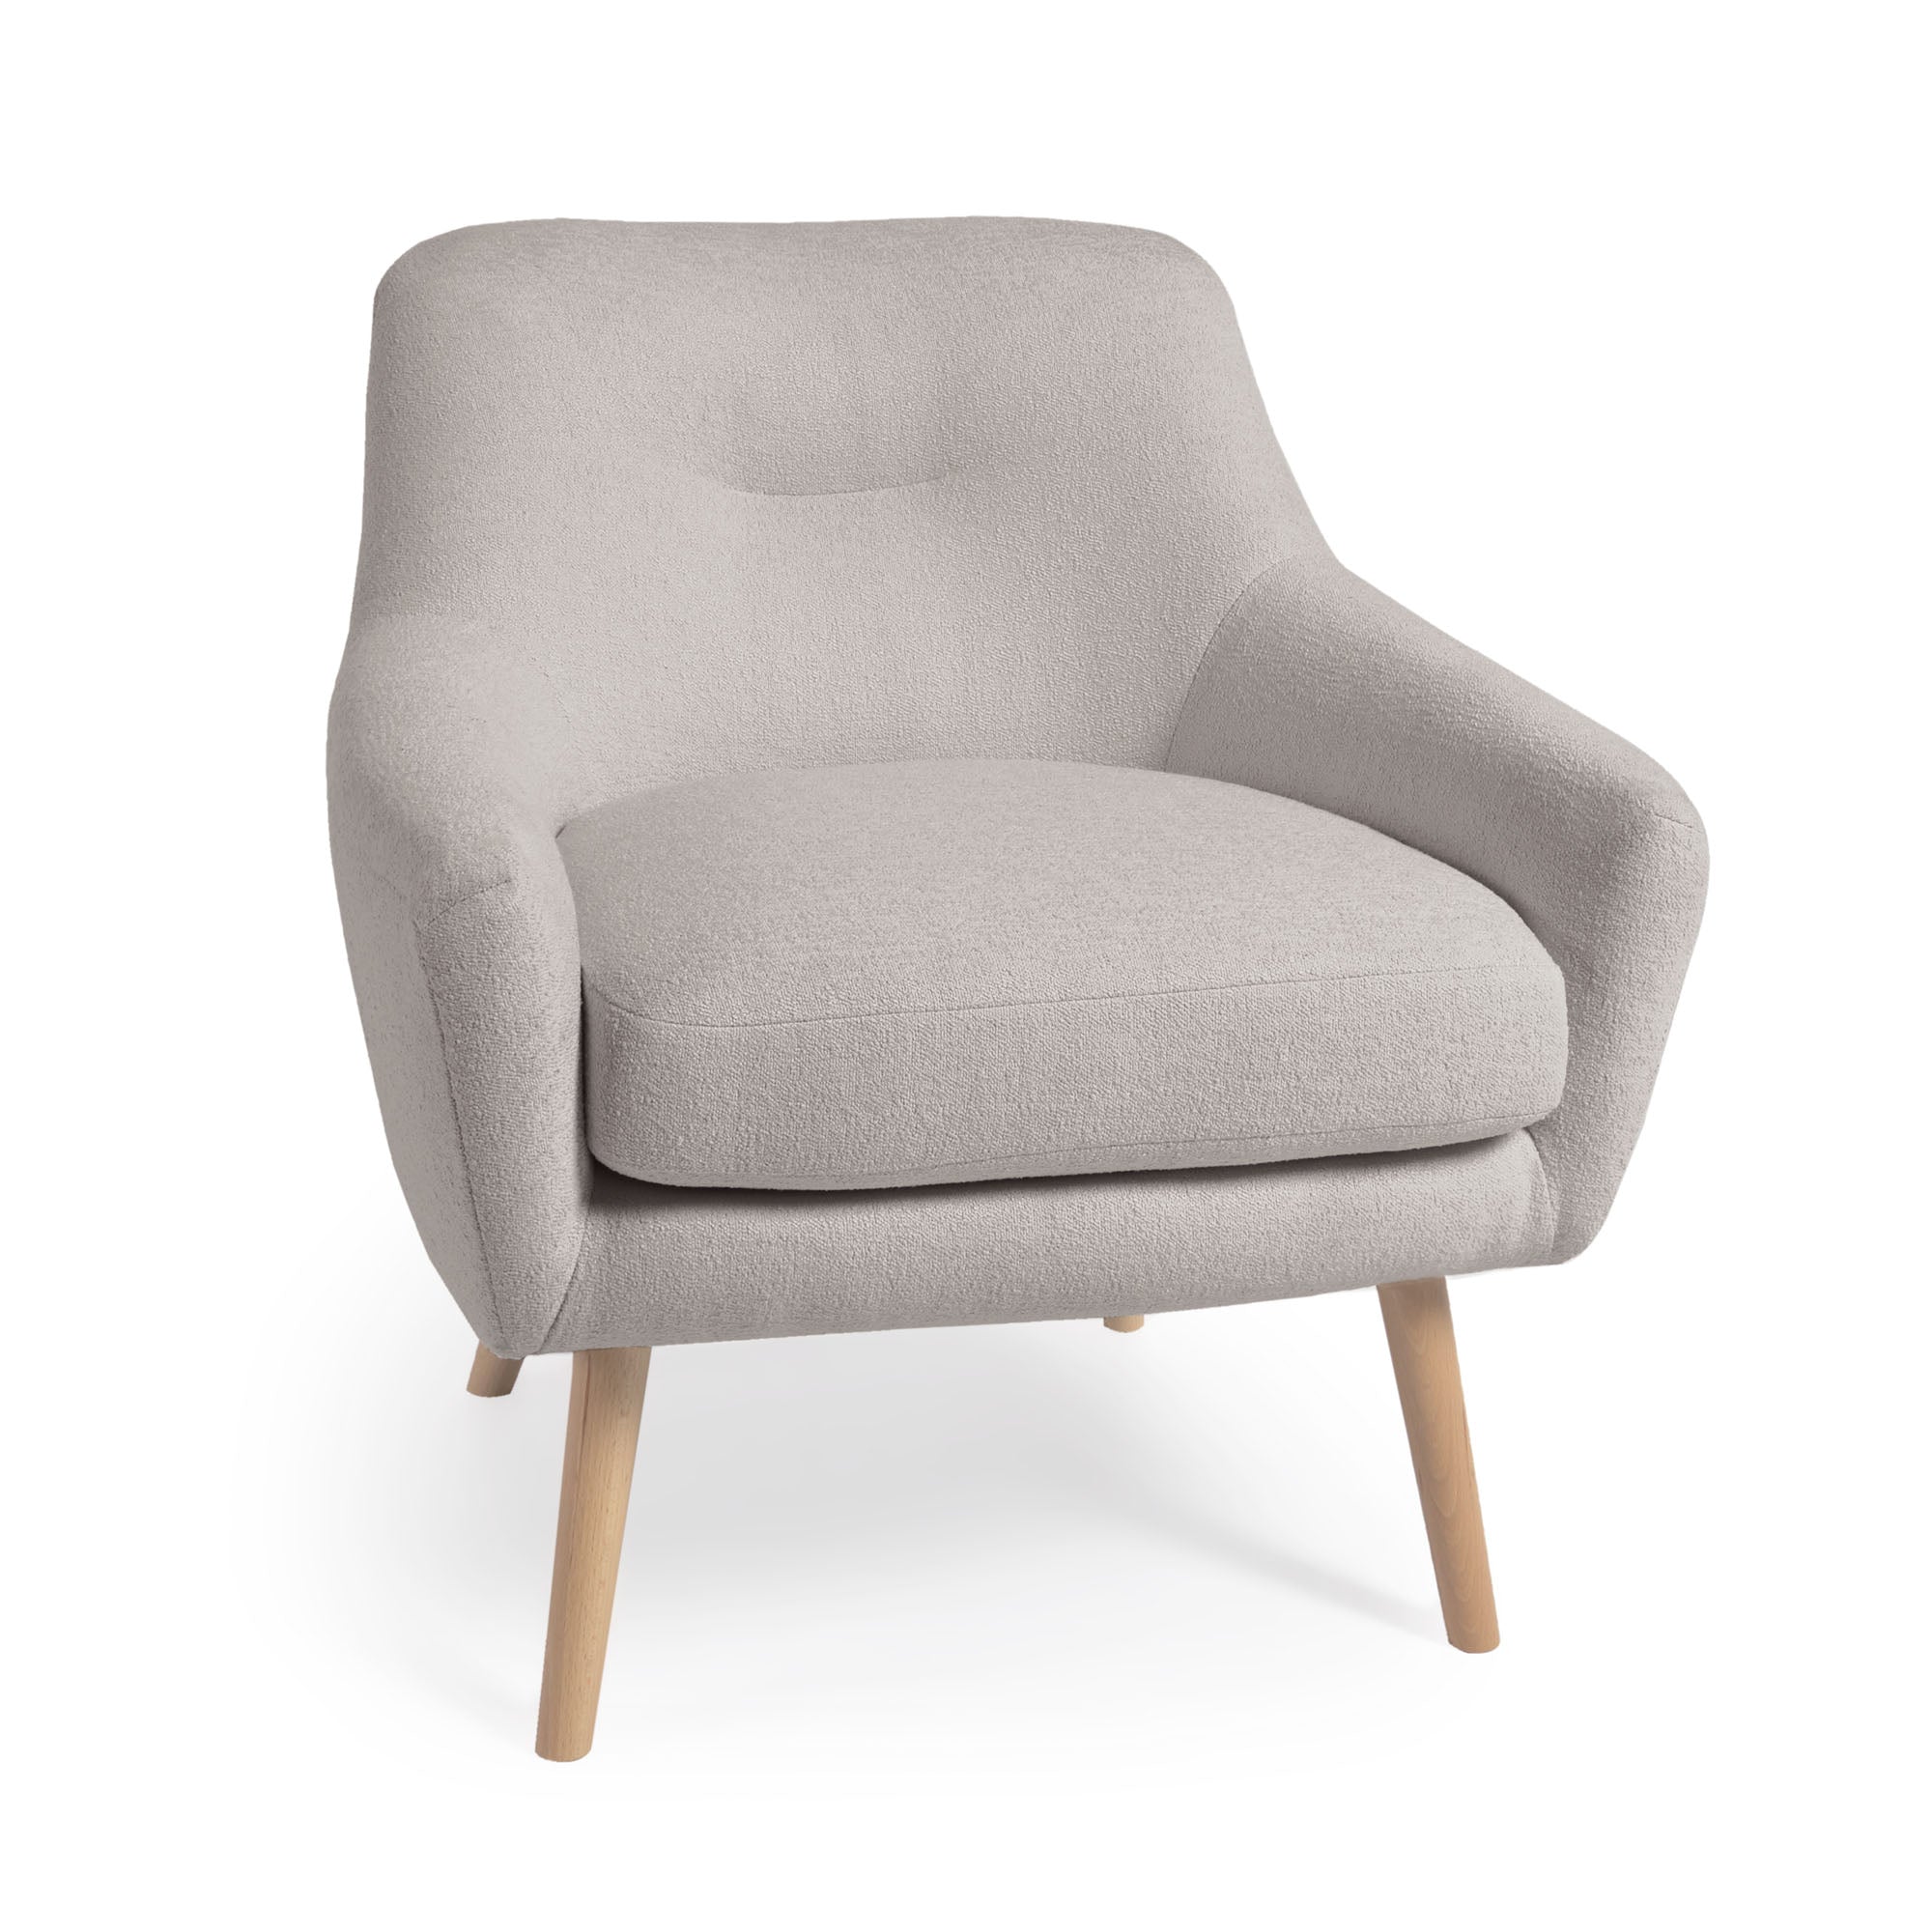 Candela armchair in grey fleece